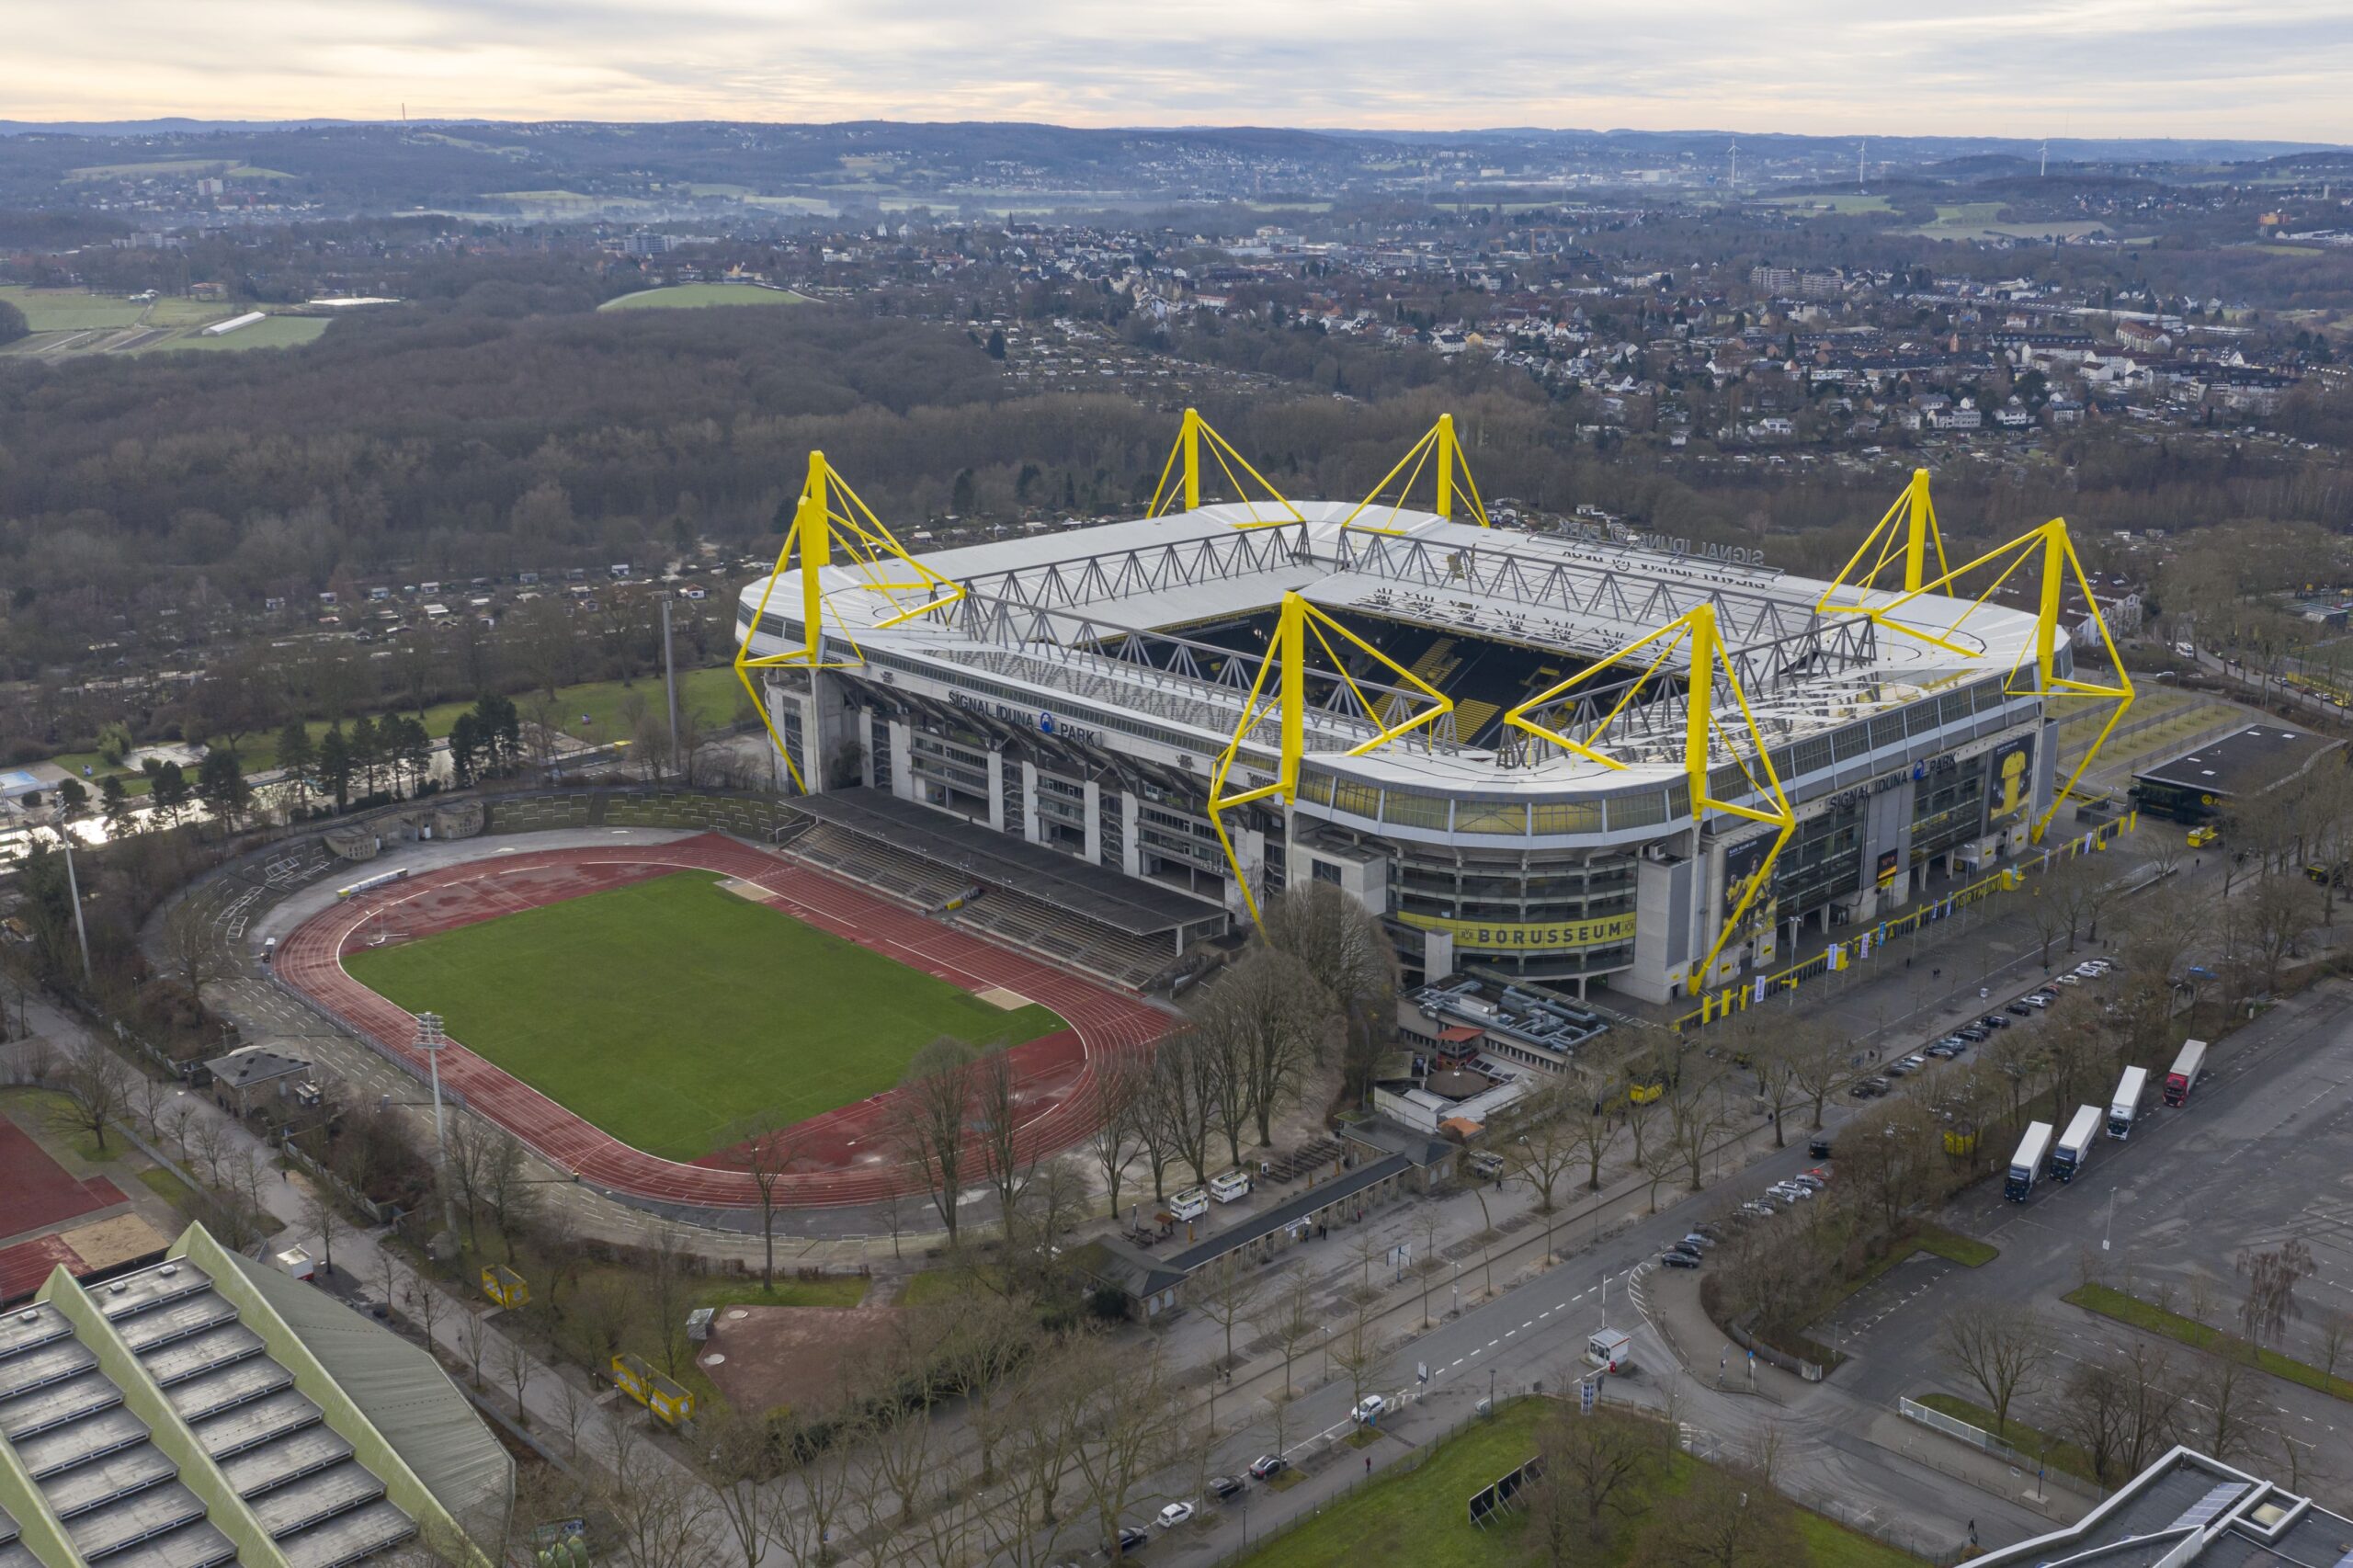 Westfalenstadion: 50 years of home